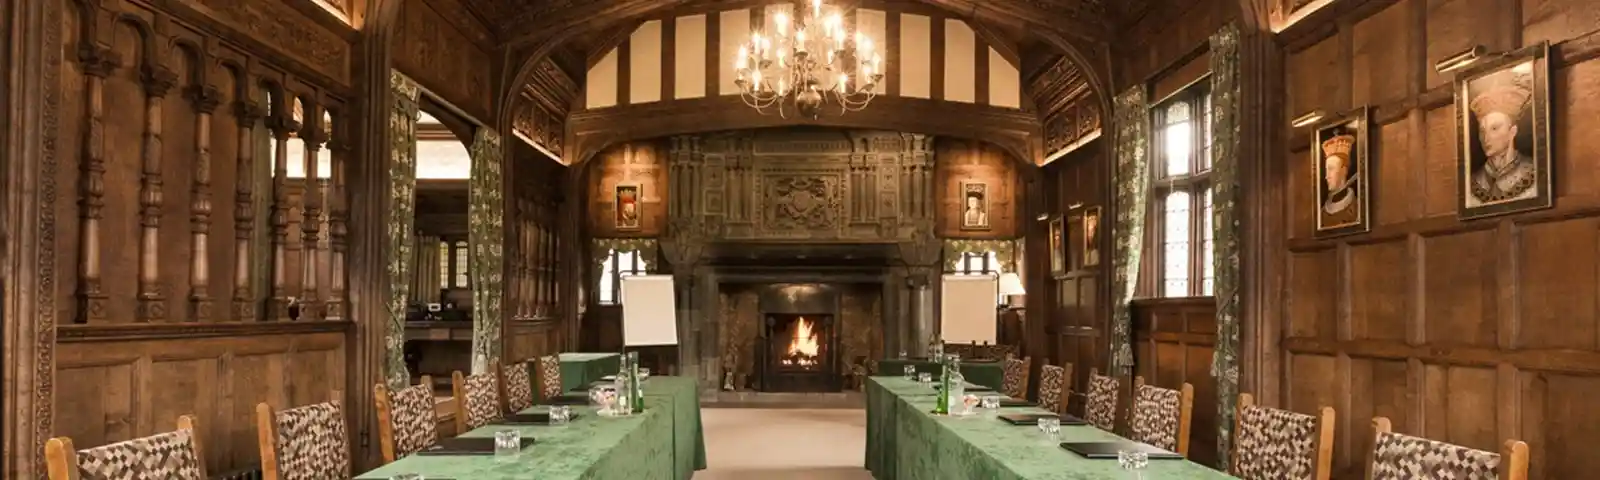 Hever Castle Tudor Suite Dining Room